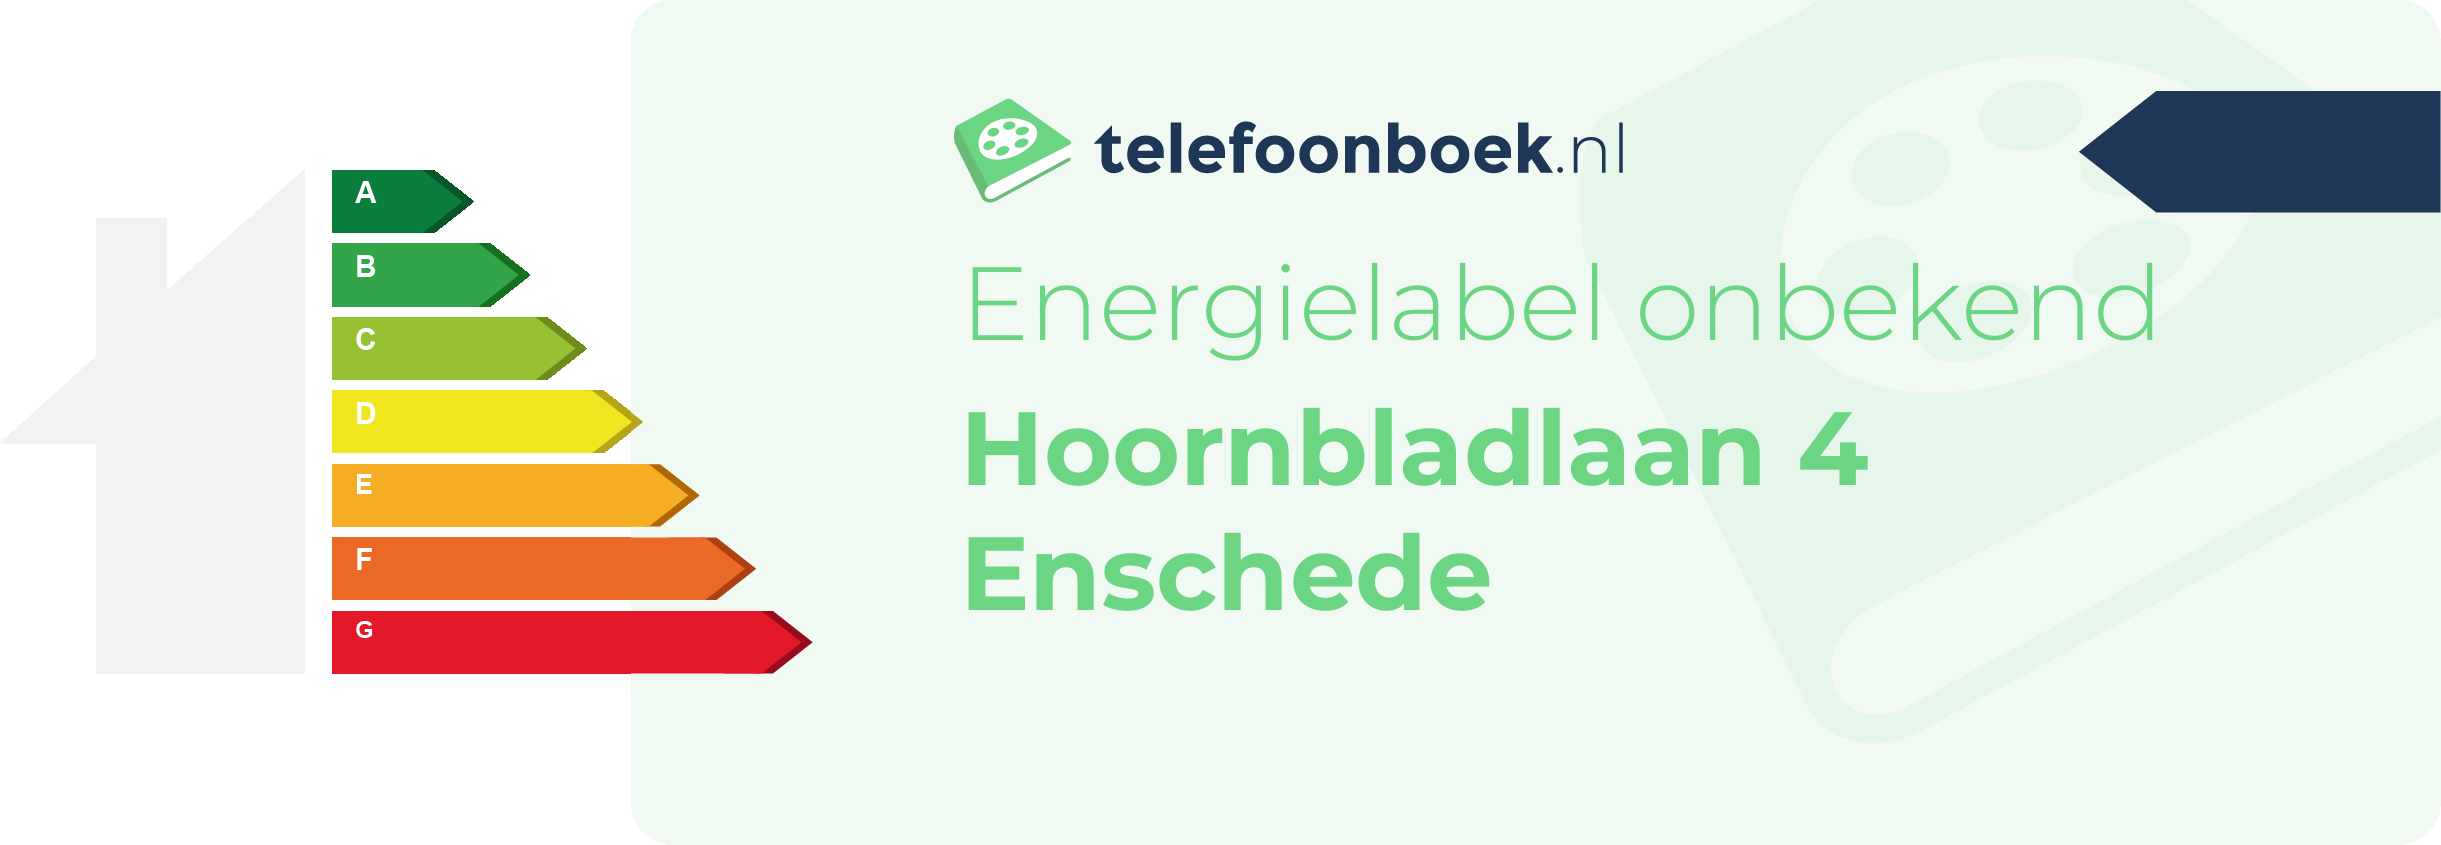 Energielabel Hoornbladlaan 4 Enschede